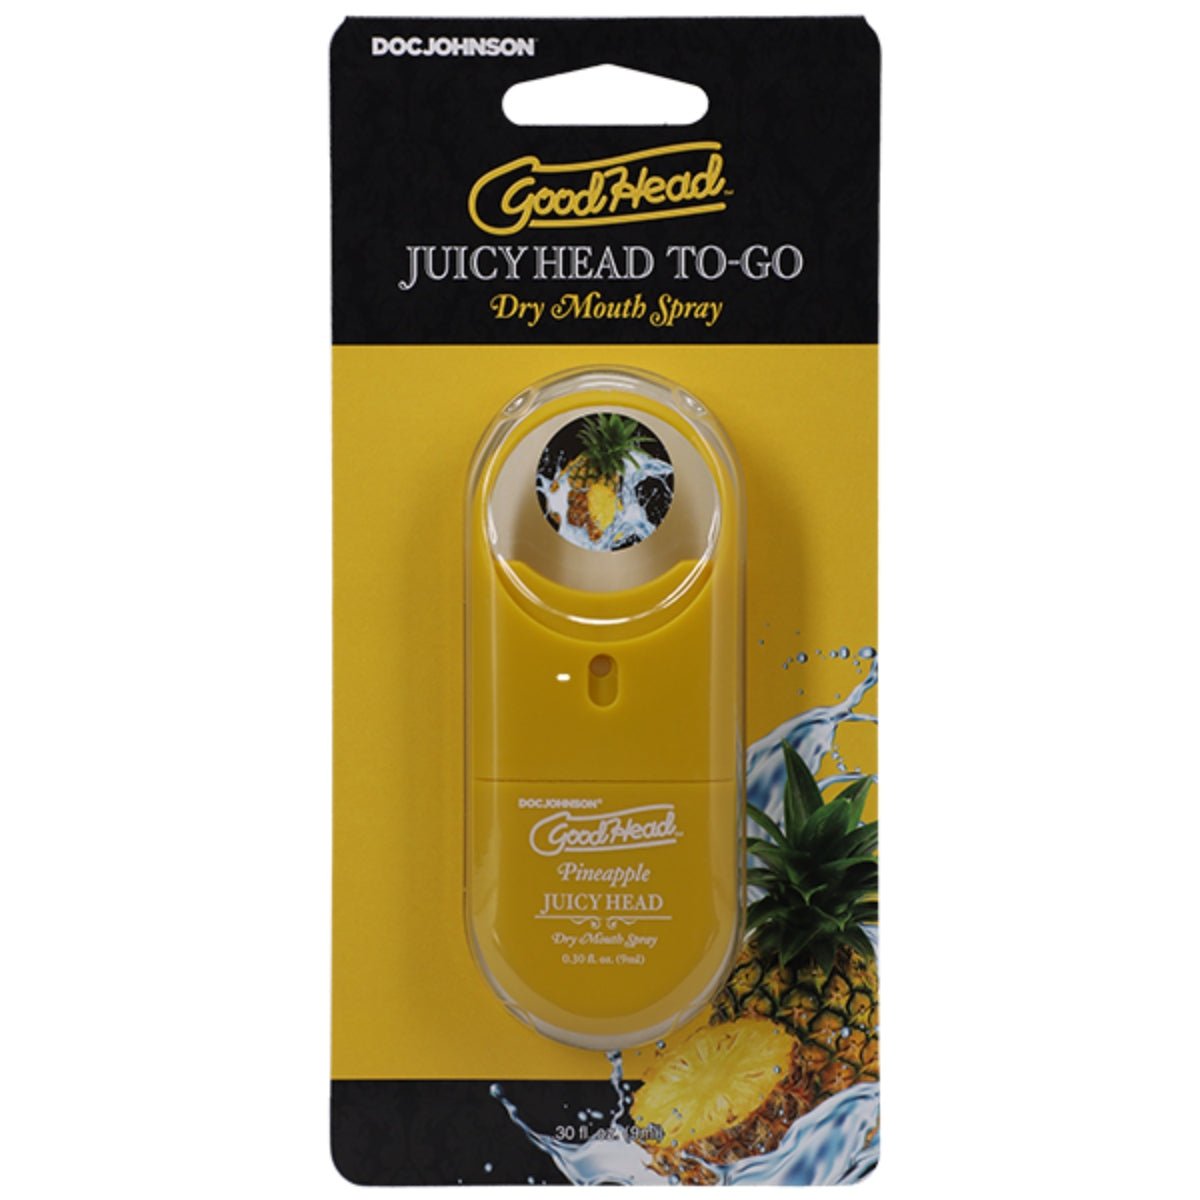 Flavoured Lube Goodhead Juicy Head Dry Mouth Spray To-Go Pineapple 30 fl oz   